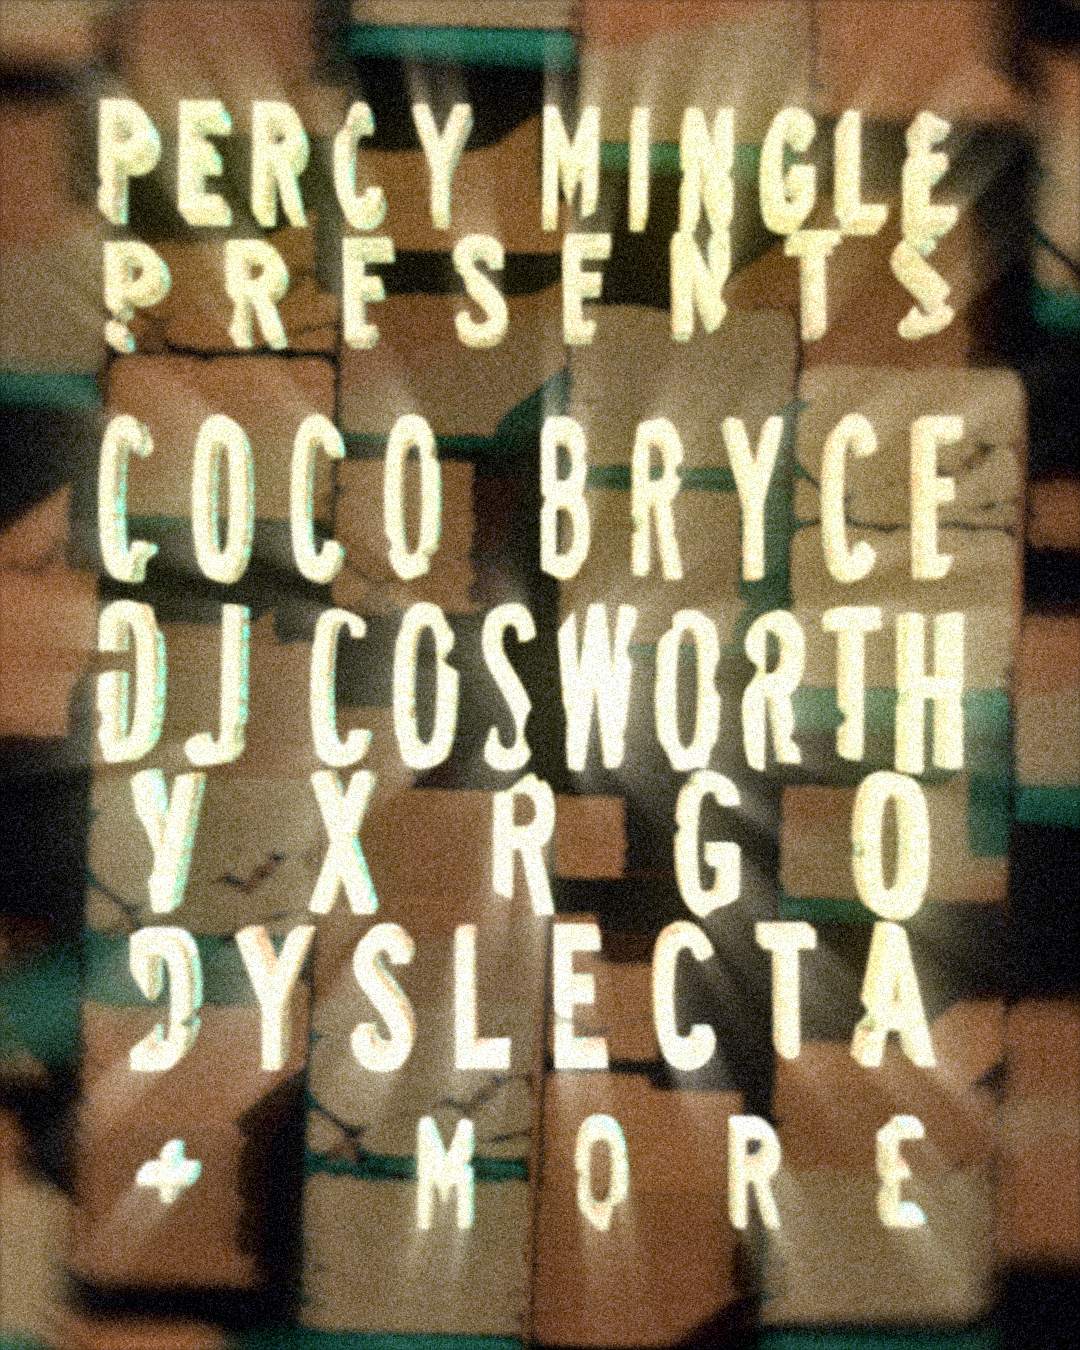 Percy Mingle presents - Coco Bryce, DJ Cosworth, VXRGO, Dyslecta - フライヤー表